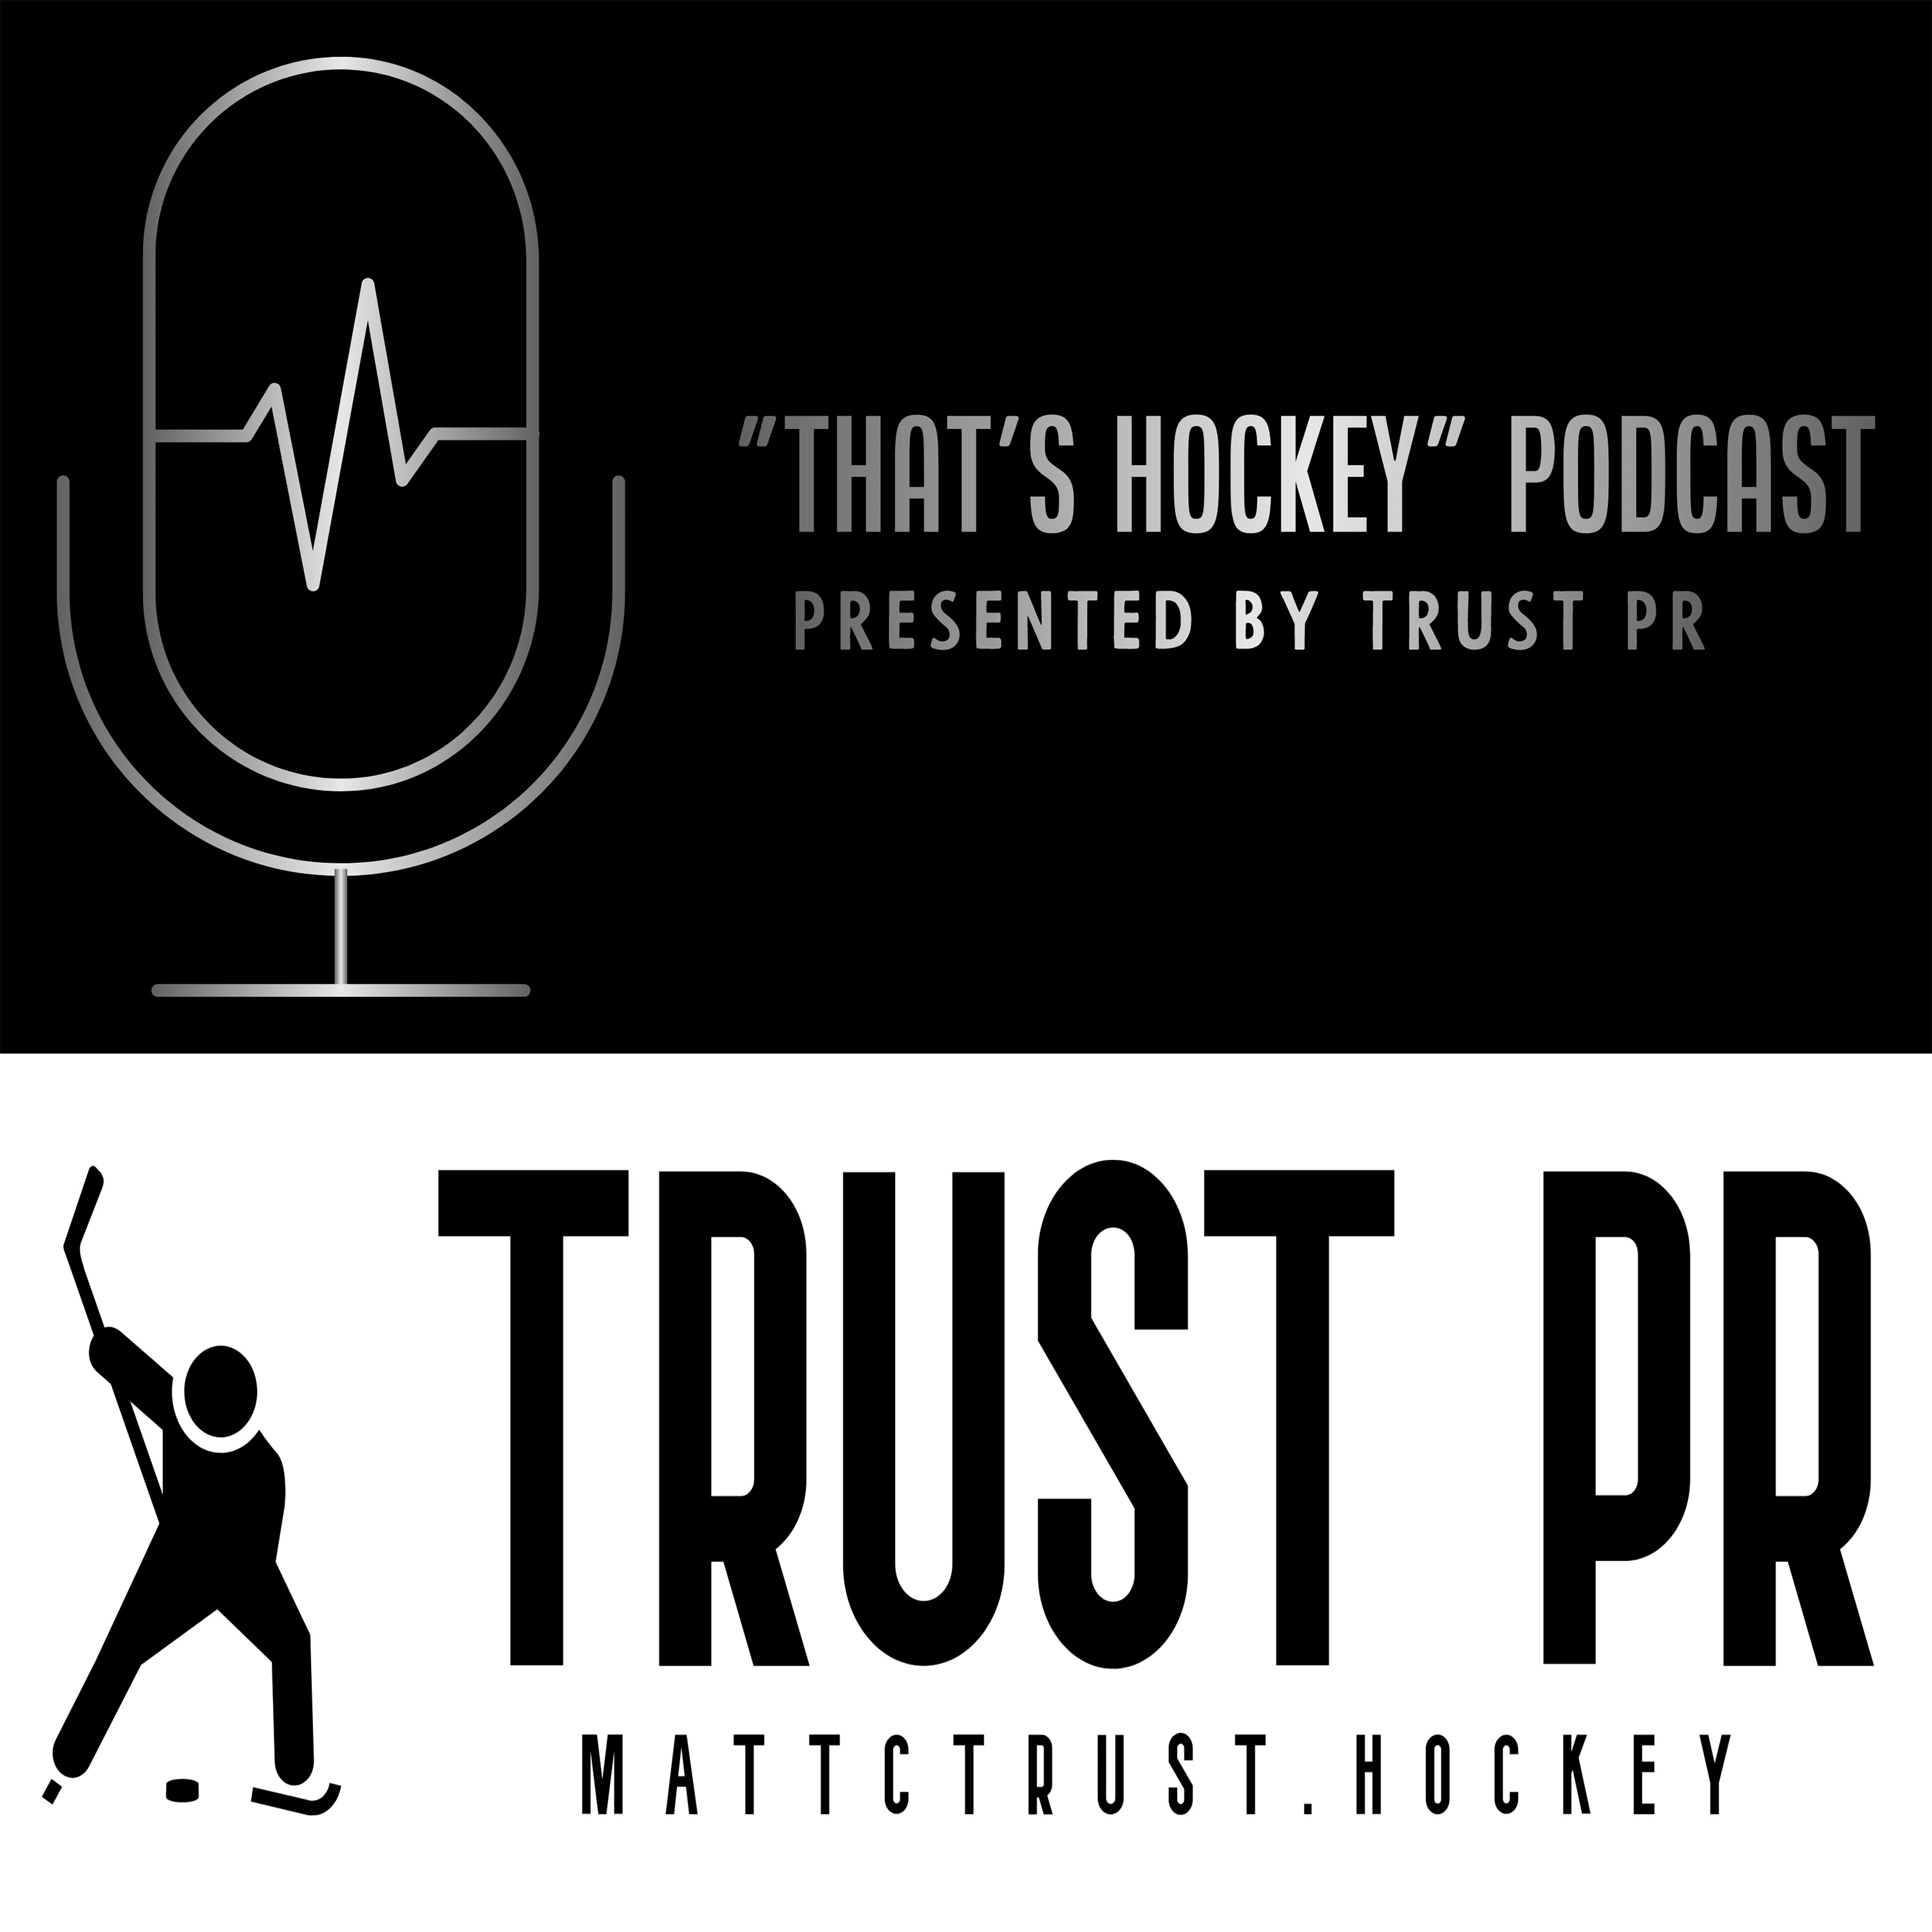 "That's Hockey" Podcast